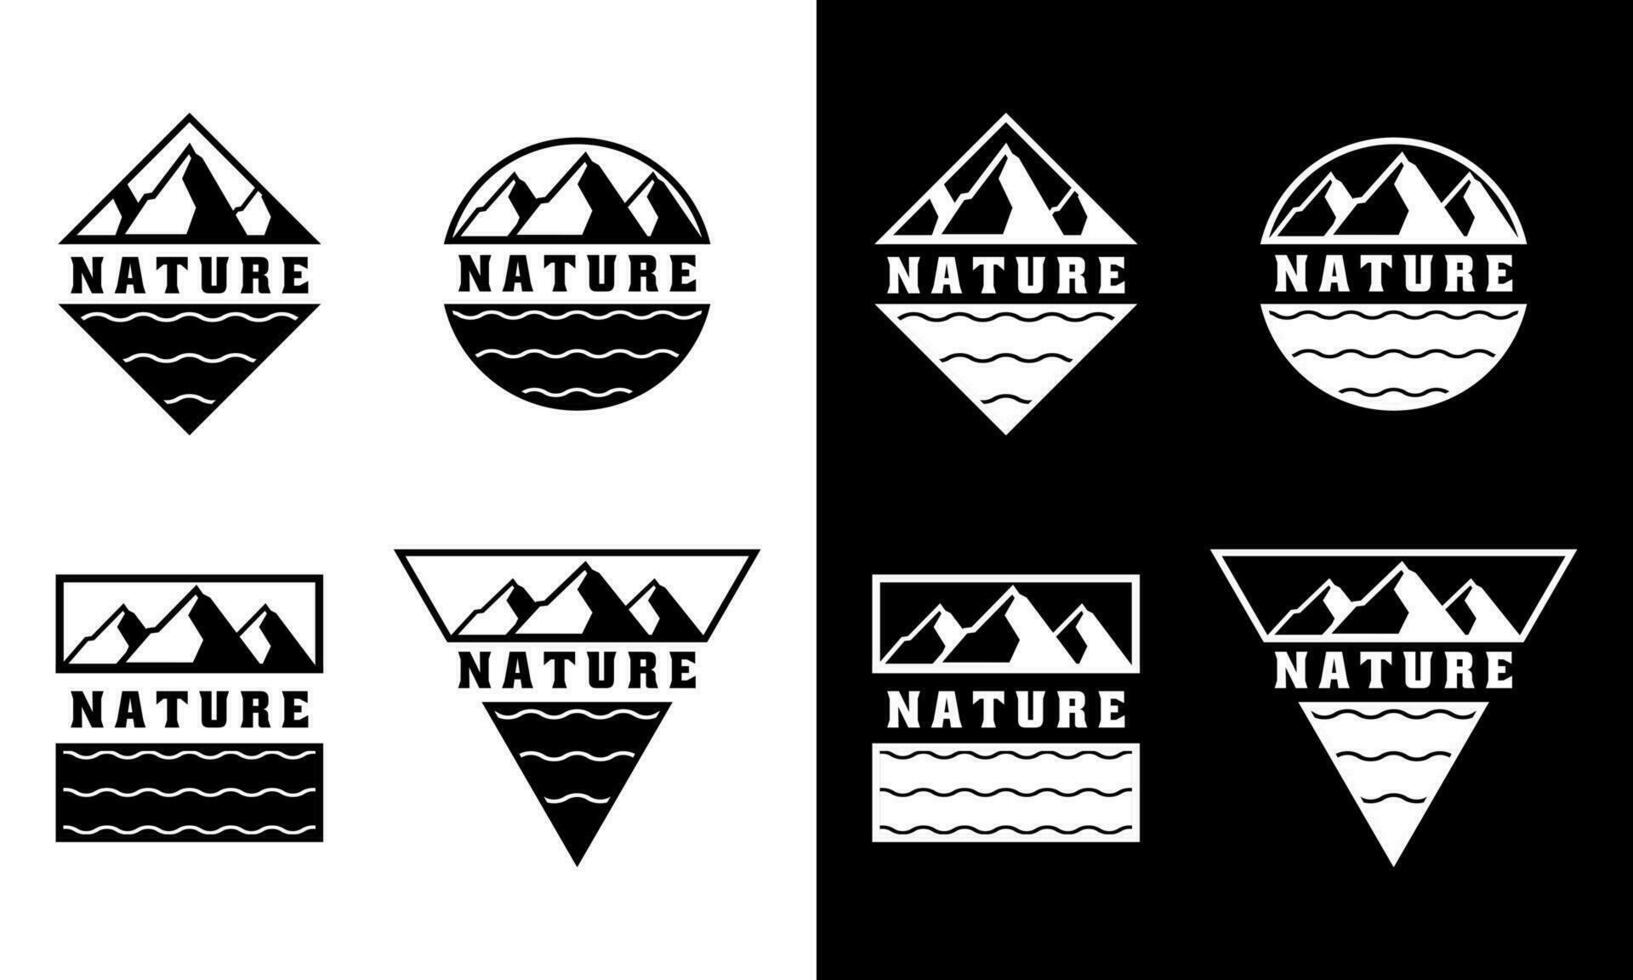 naturaleza y aventuras vector logo colocar. eso es adecuado para logos de naturaleza amantes, aventureros, montaña escaladores, exploradores, comunidades, marcas, y otros.